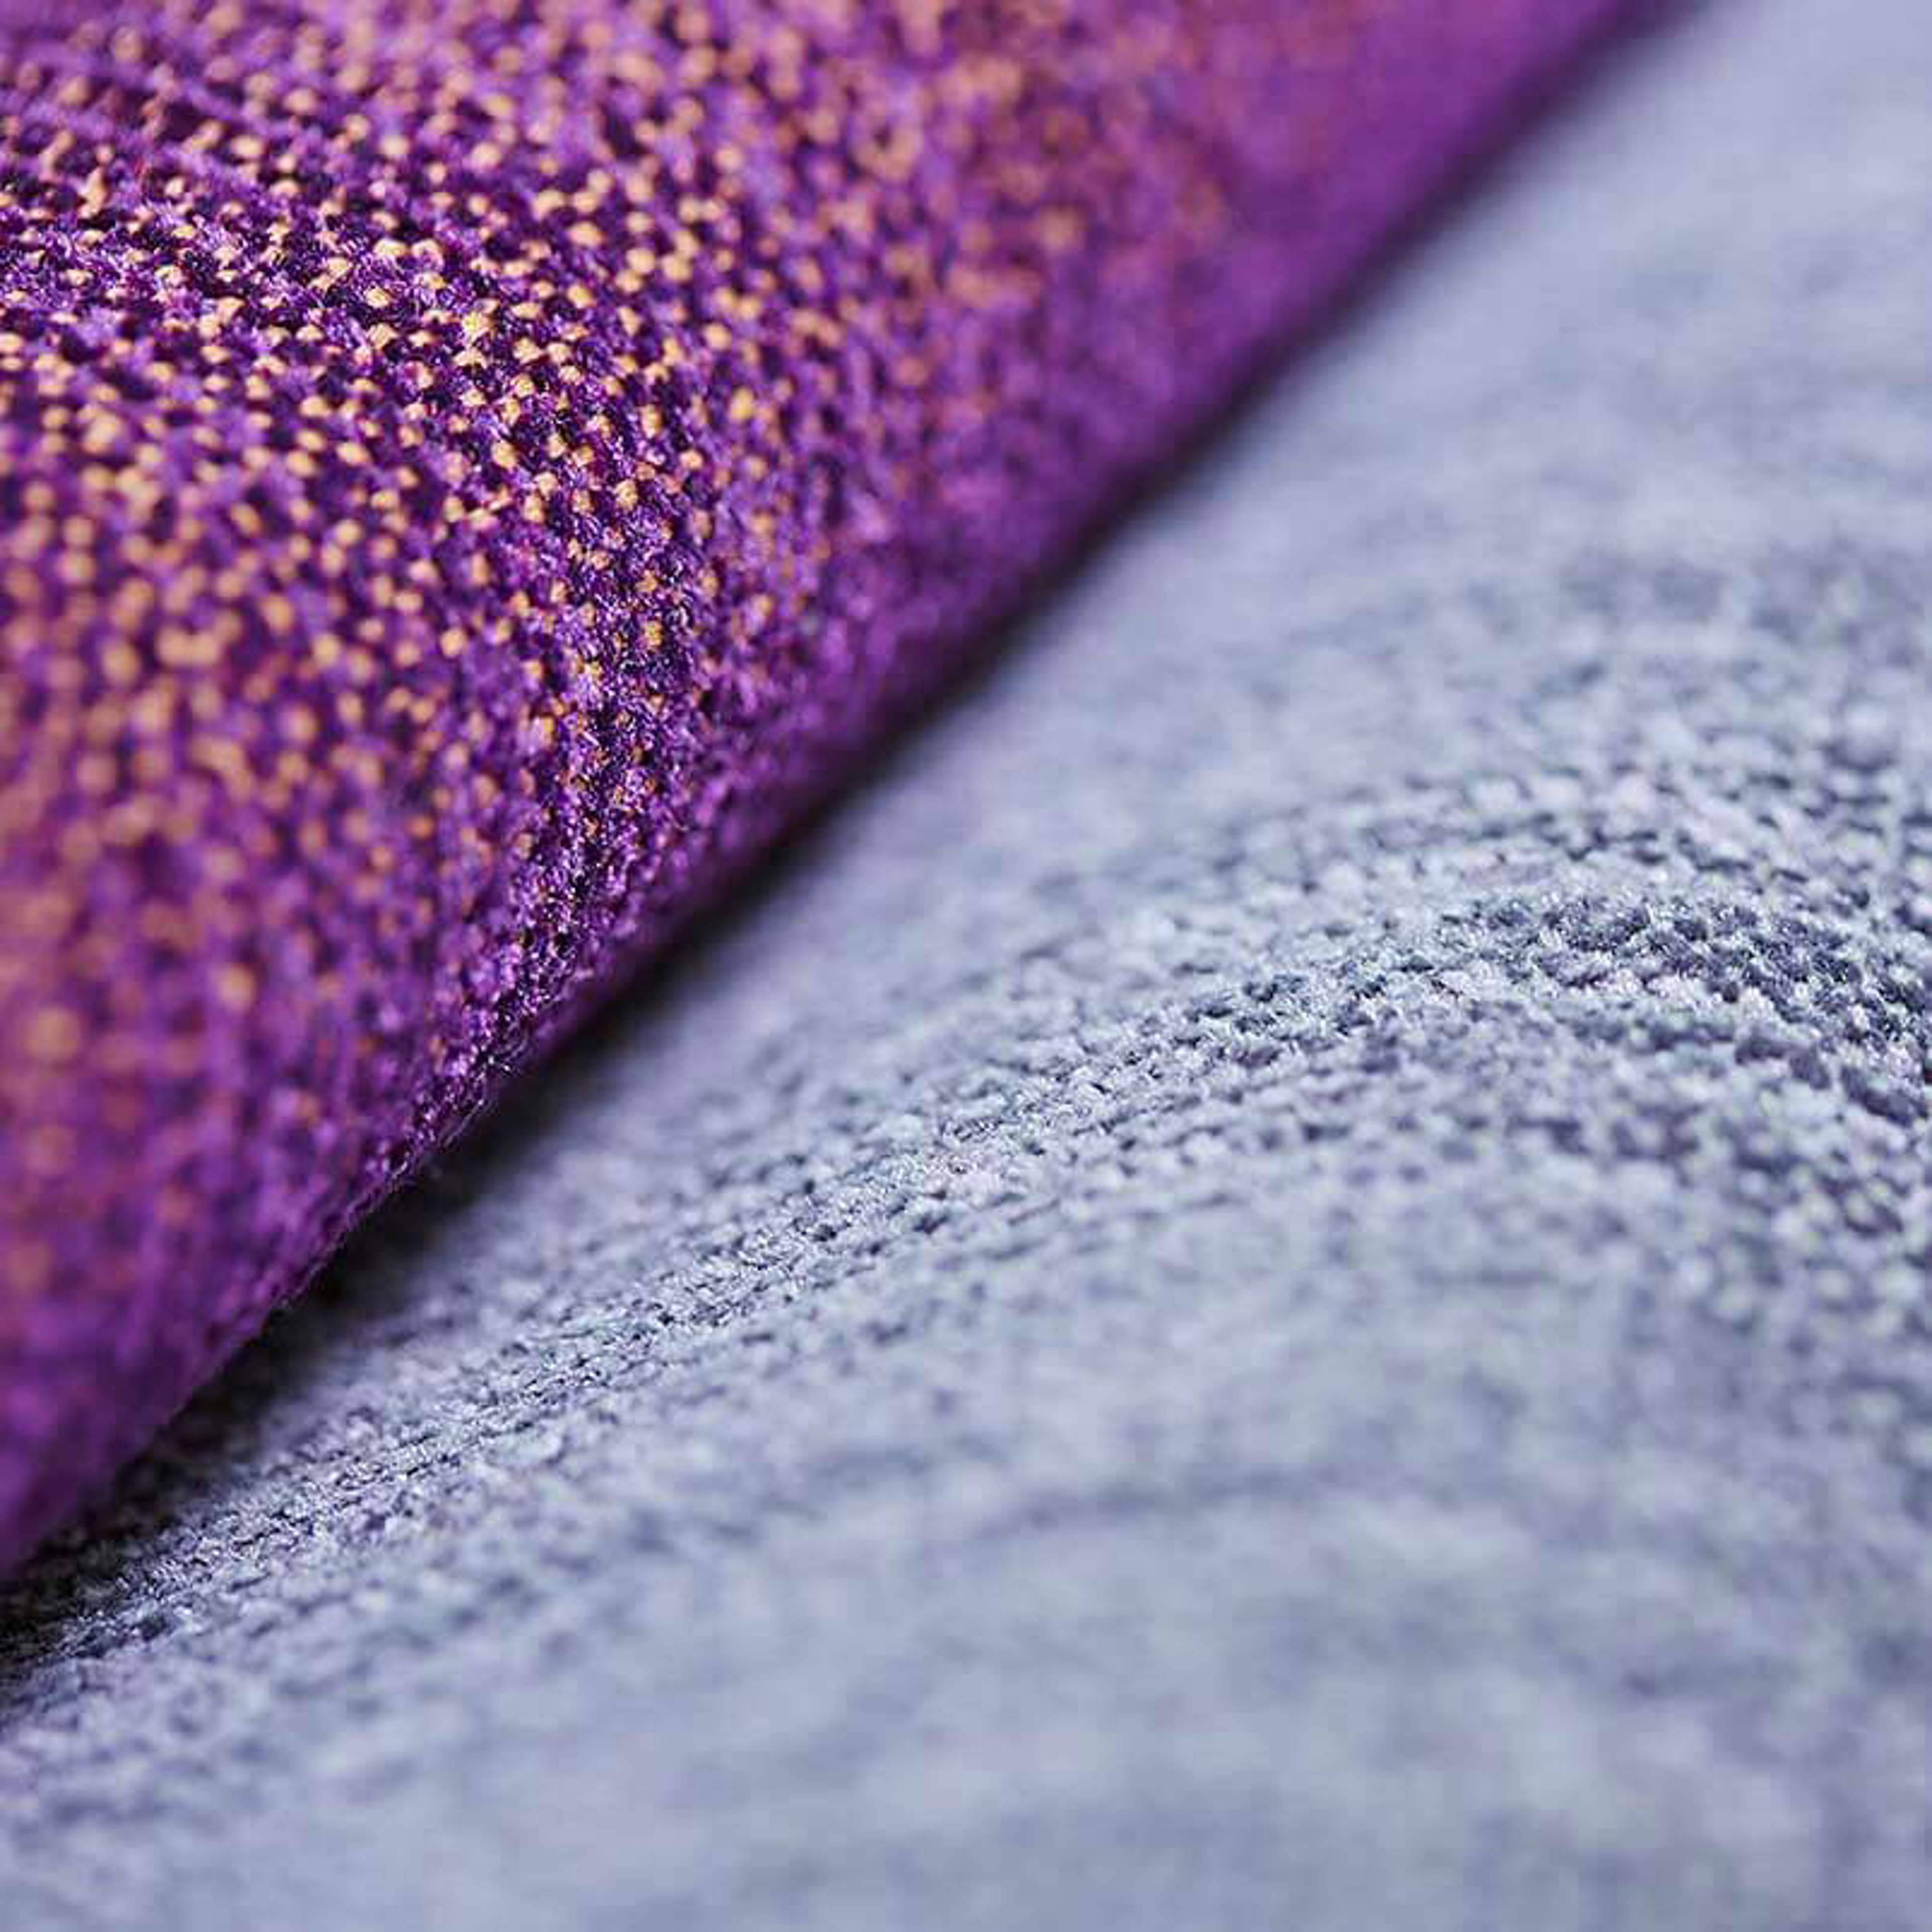 OXYGEN VIRTUE - Upholstery fabrics from Camira Fabrics